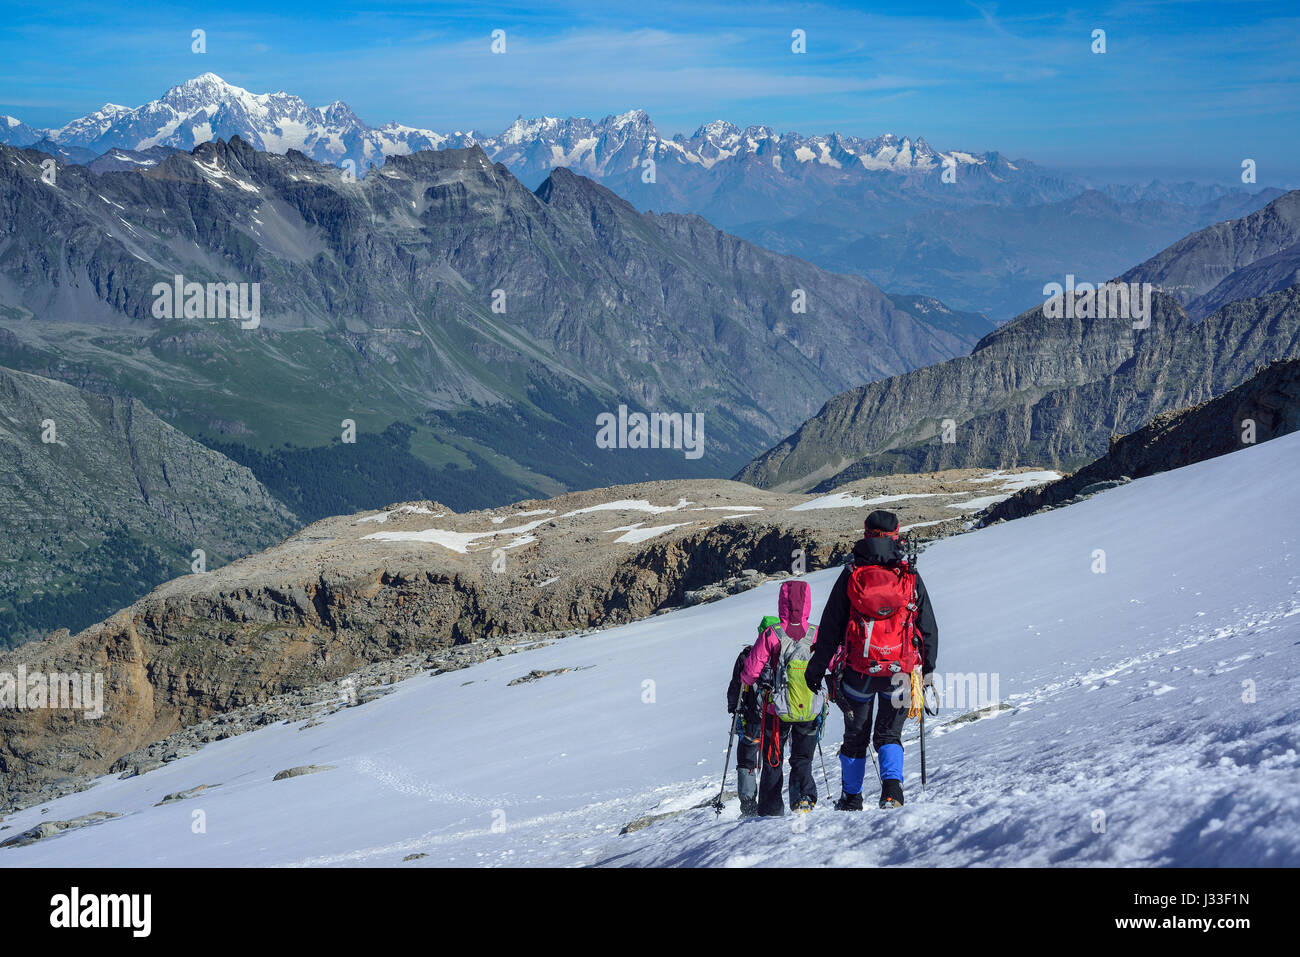 Several persons descending on glacier from Gran Paradiso, Mont Blanc in background, Gran Paradiso, Gran Paradiso Nationalpark, Graian Alps range, valley of Aosta, Aosta, Italy Stock Photo